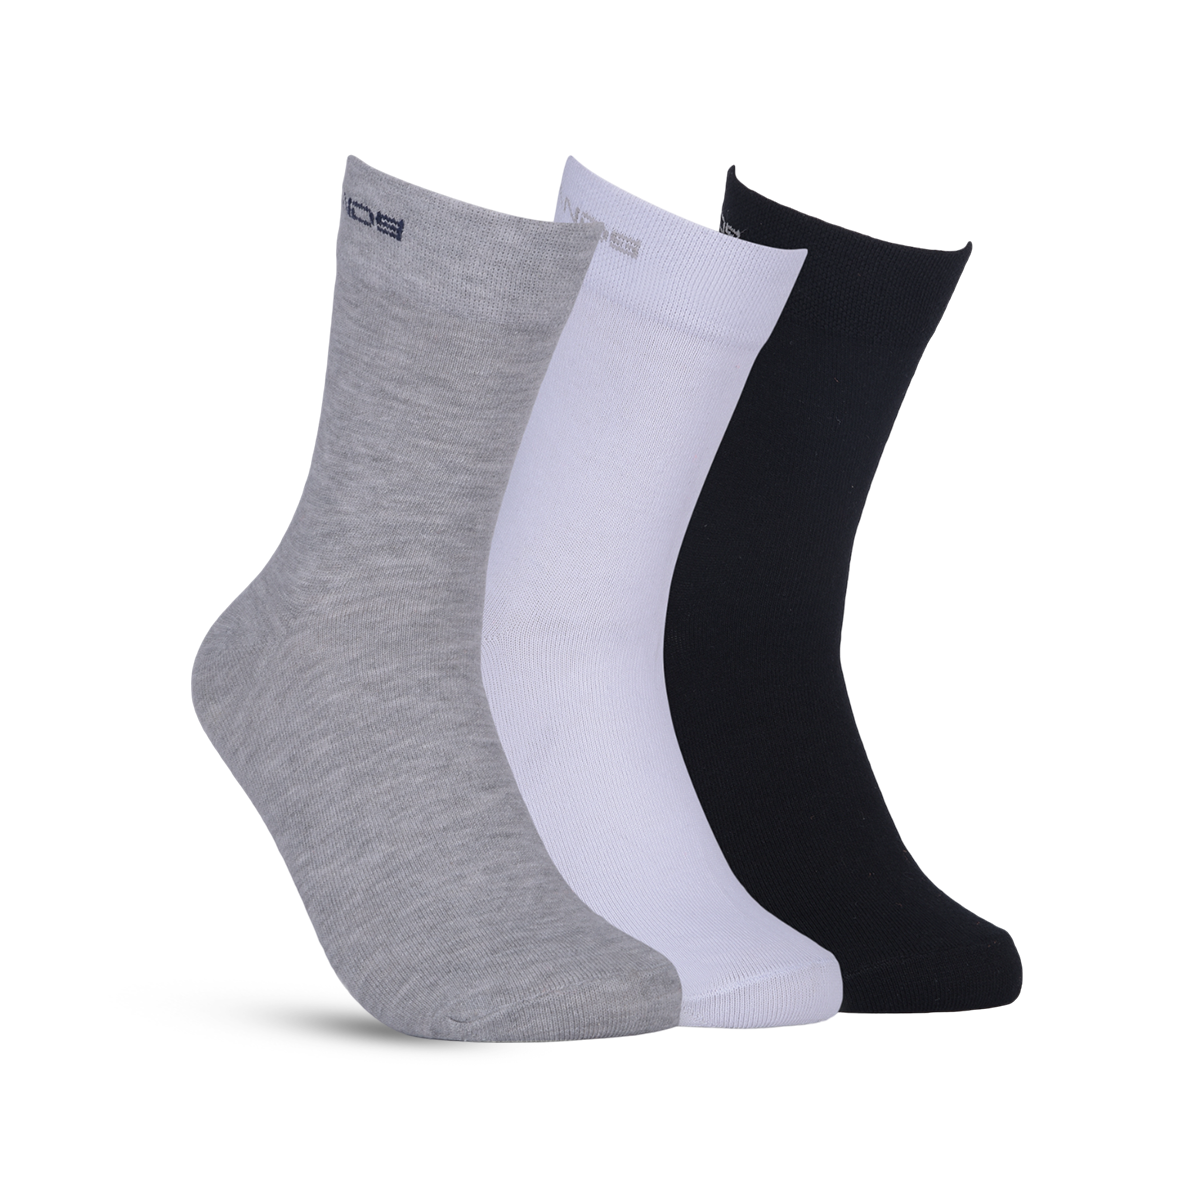 TRISH White/Gray/Black Crew Socks (Pack of 3) for Everyday Luxury